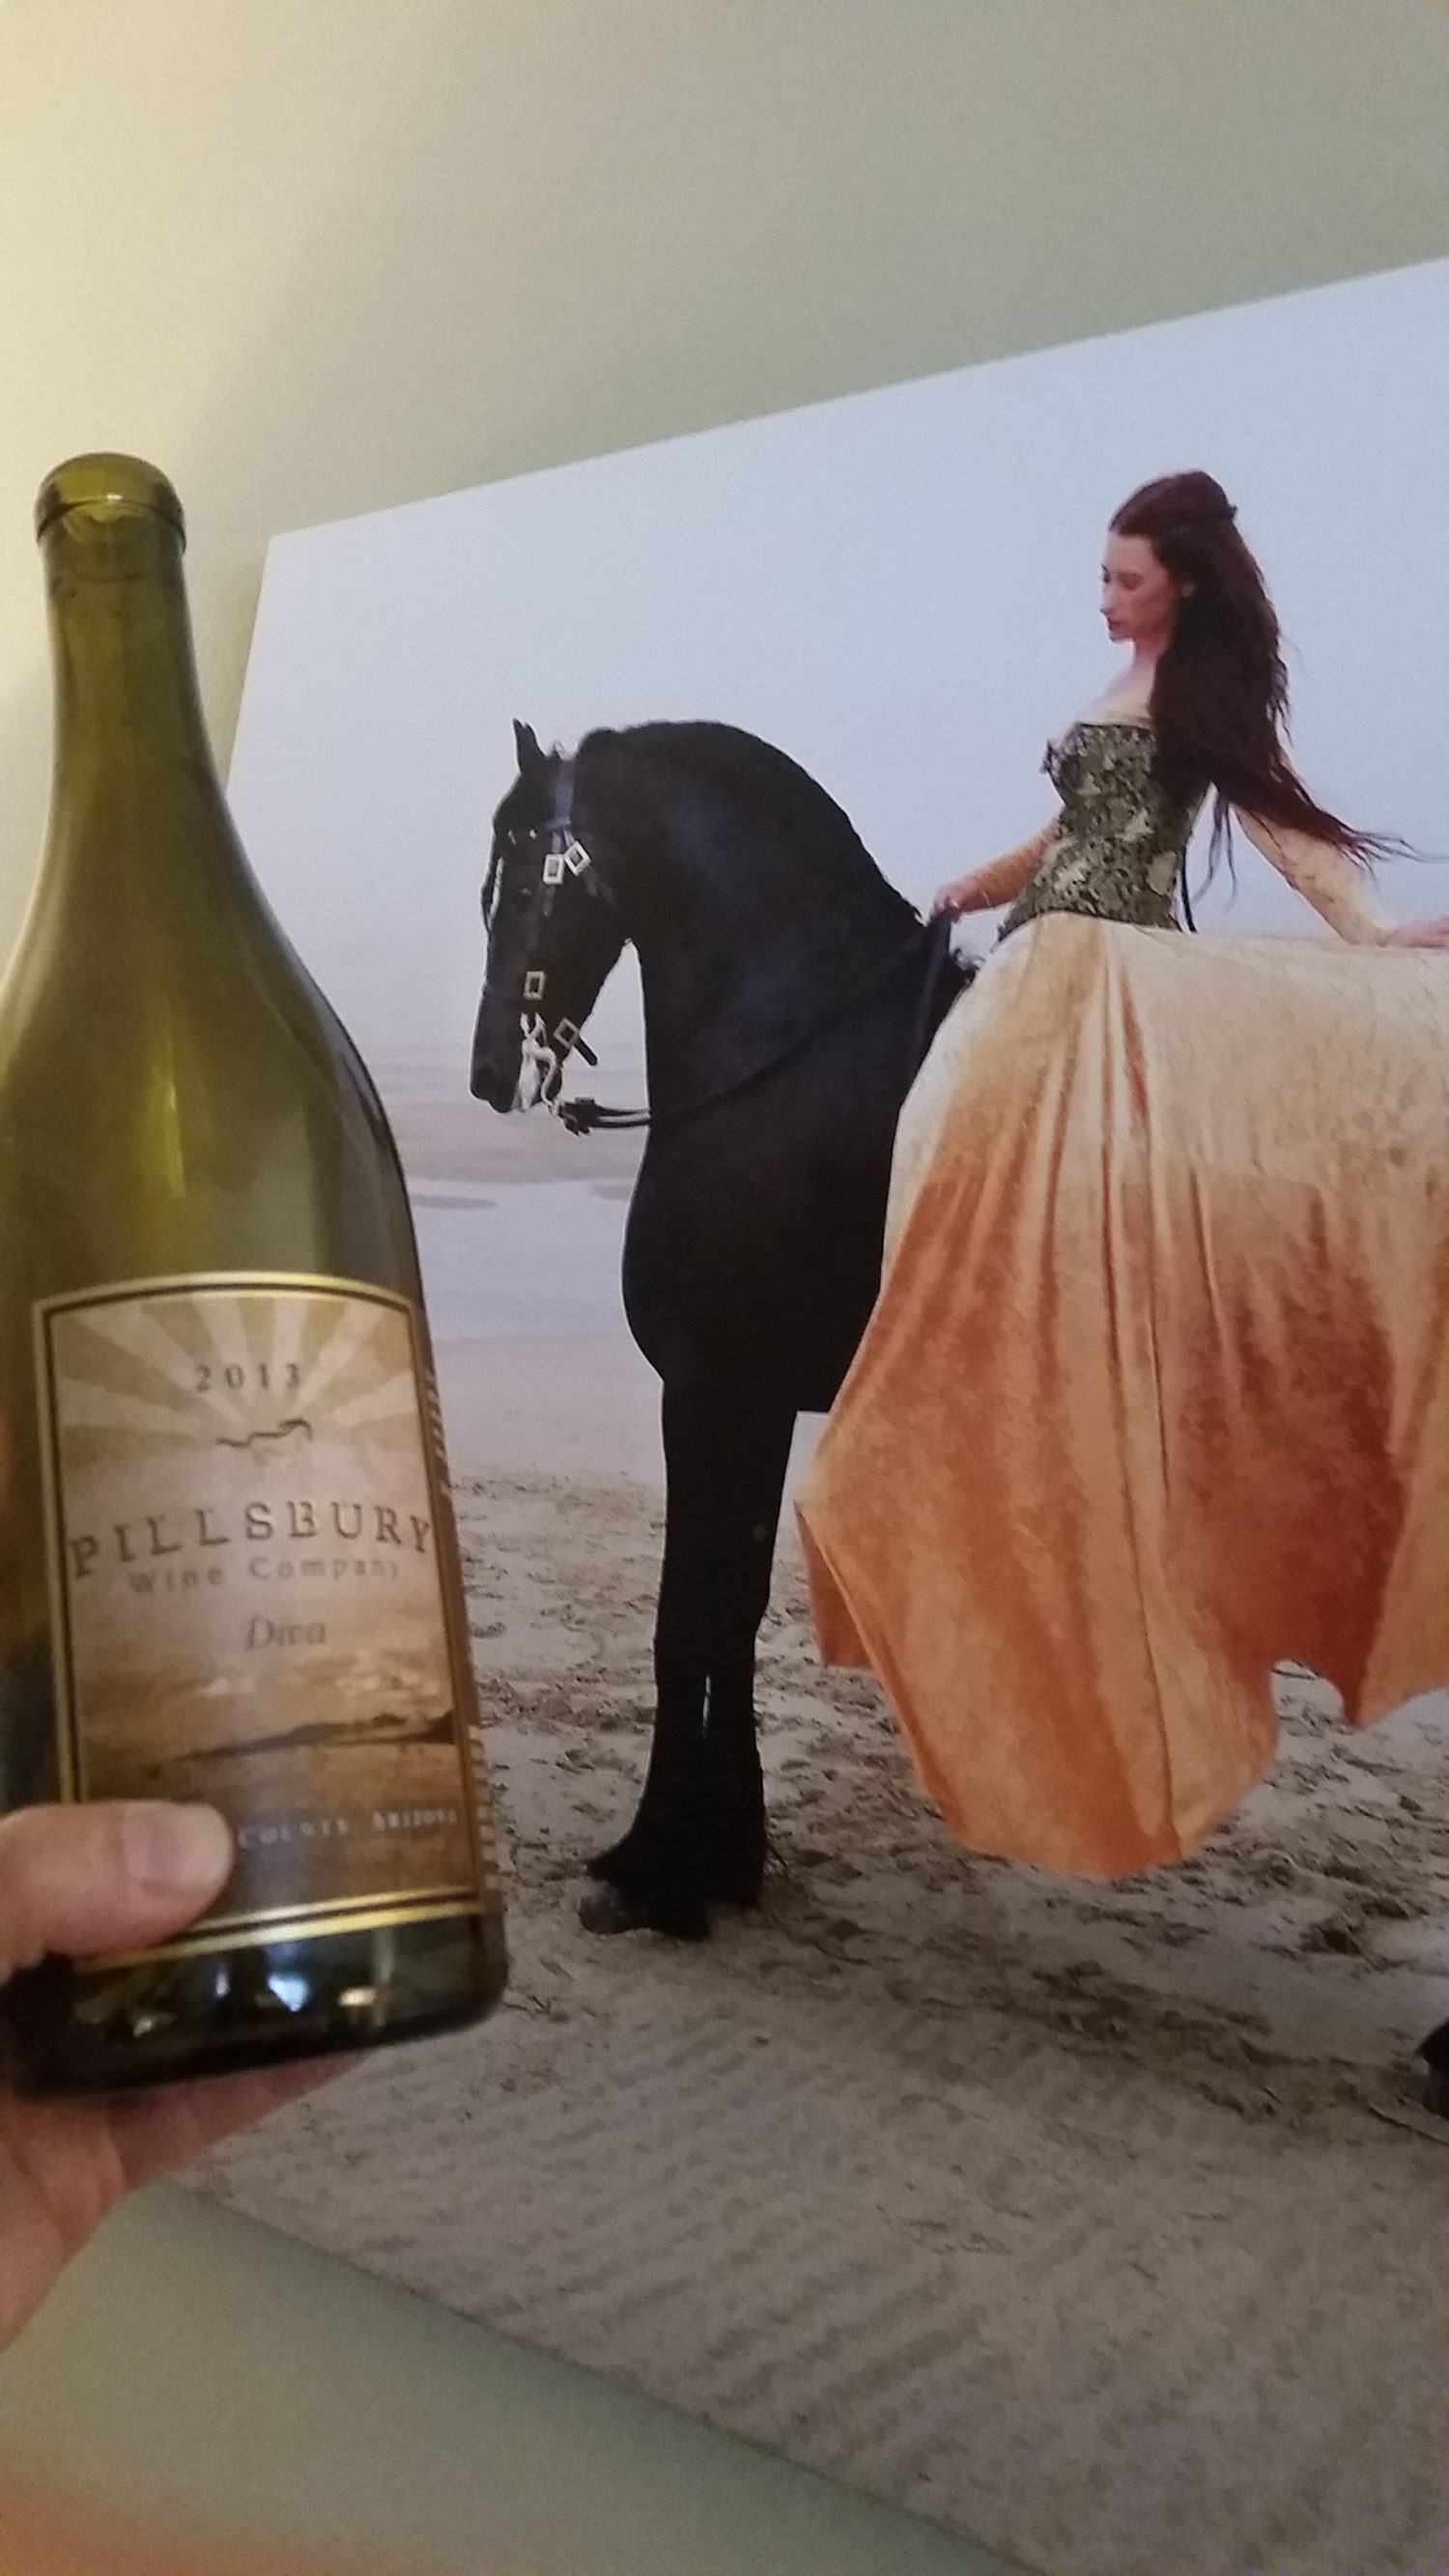 Diva Pillsbury Wine and Jody L Miller Equine Photography meet on Twitter